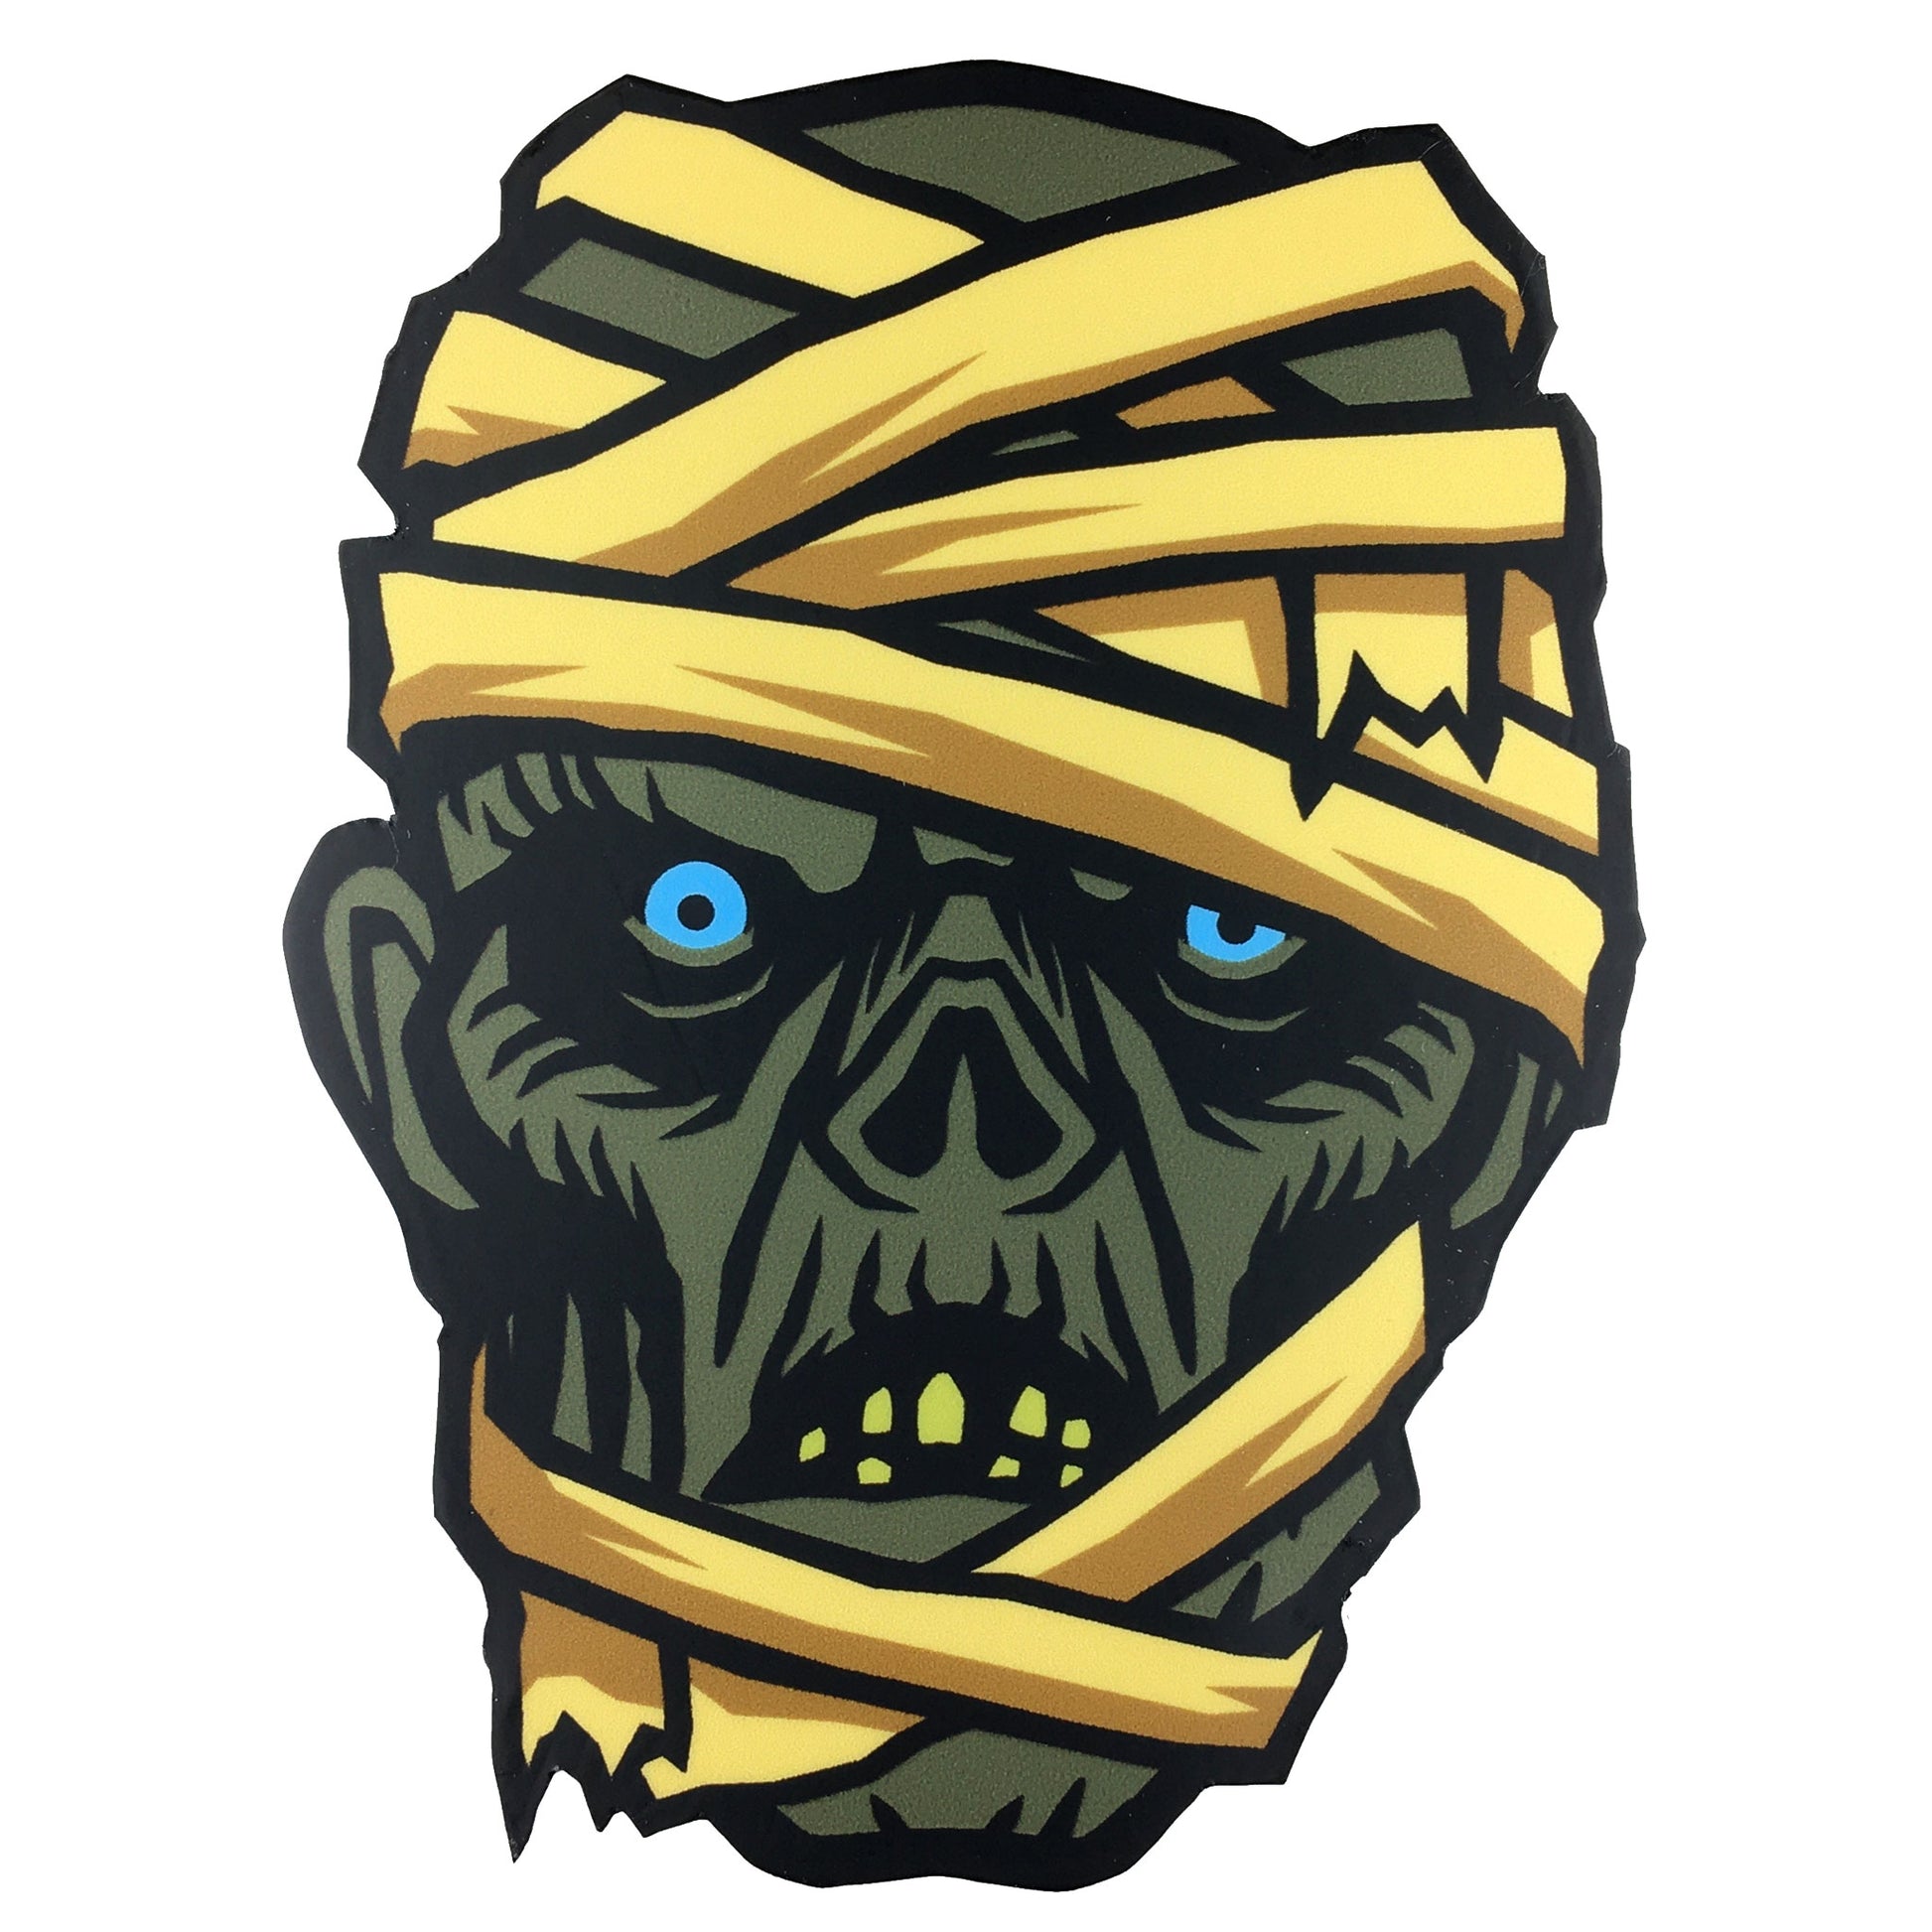 Mummy horror monster head sticker by Monsterologist